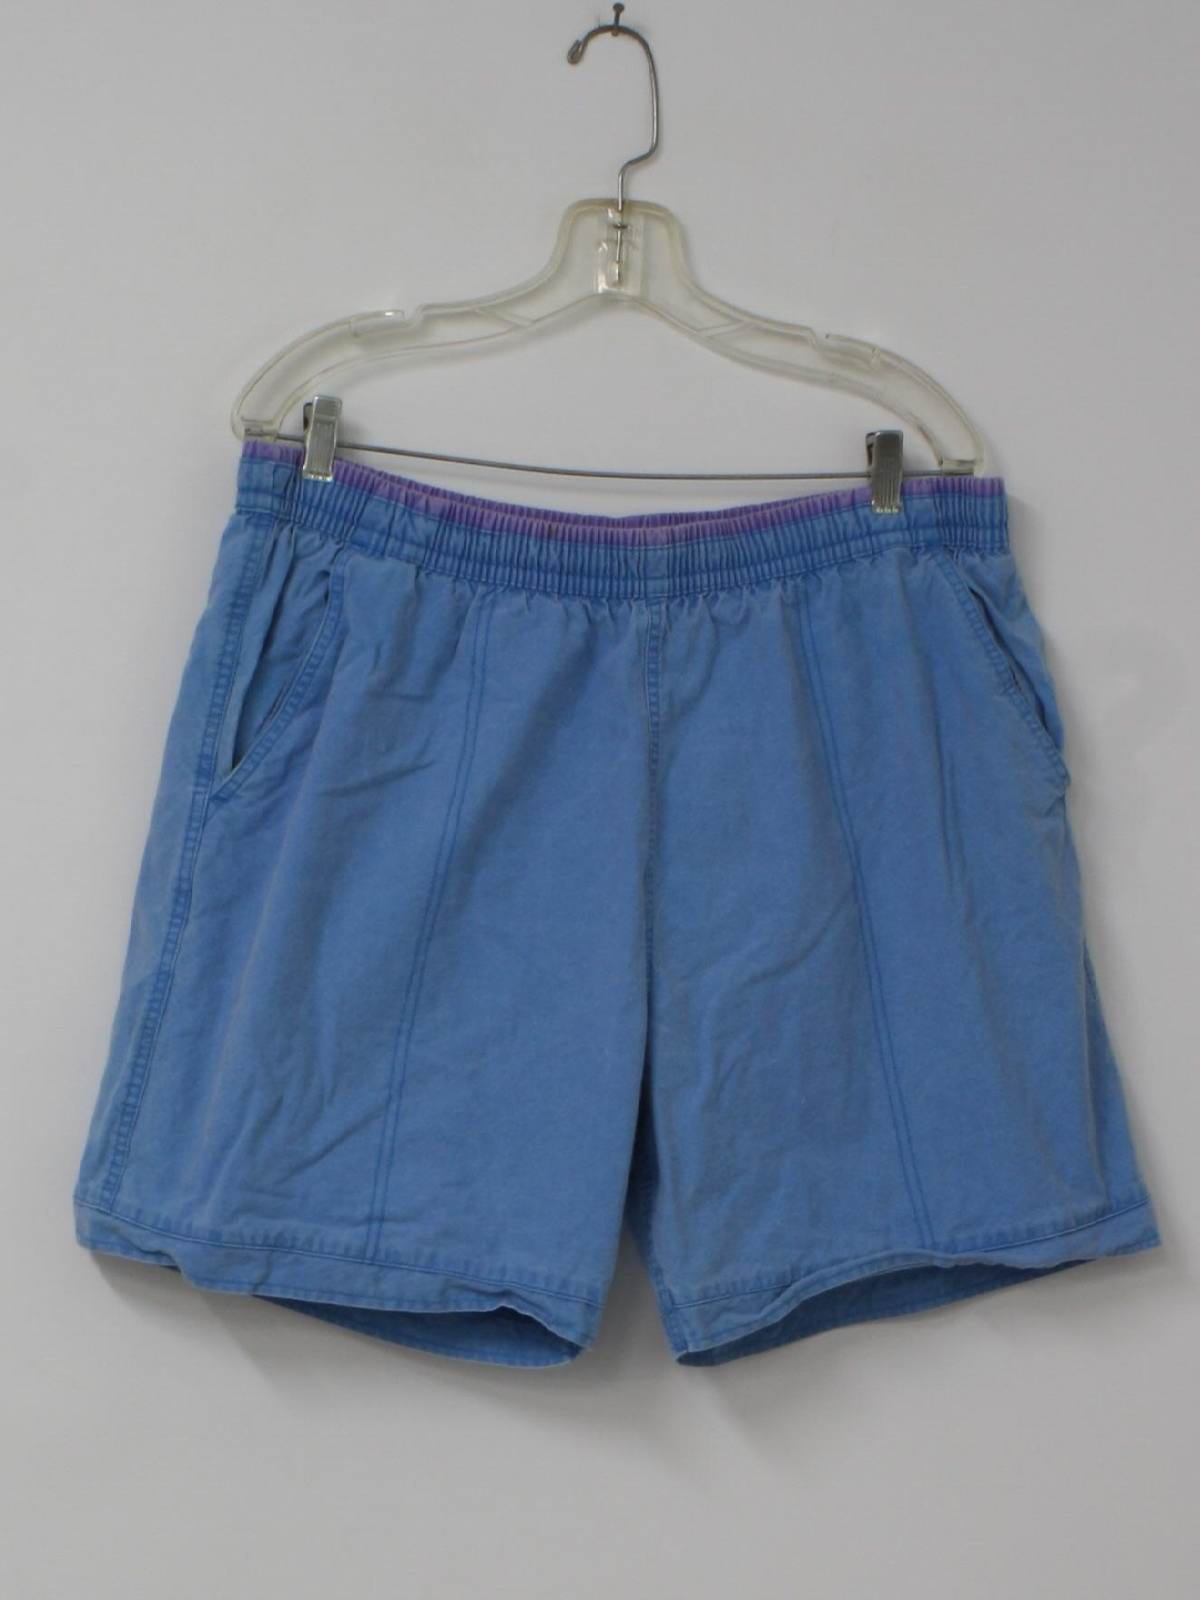 90s Retro Swimsuit/Swimwear: 90s -Beach Gear- Mens blue background with ...